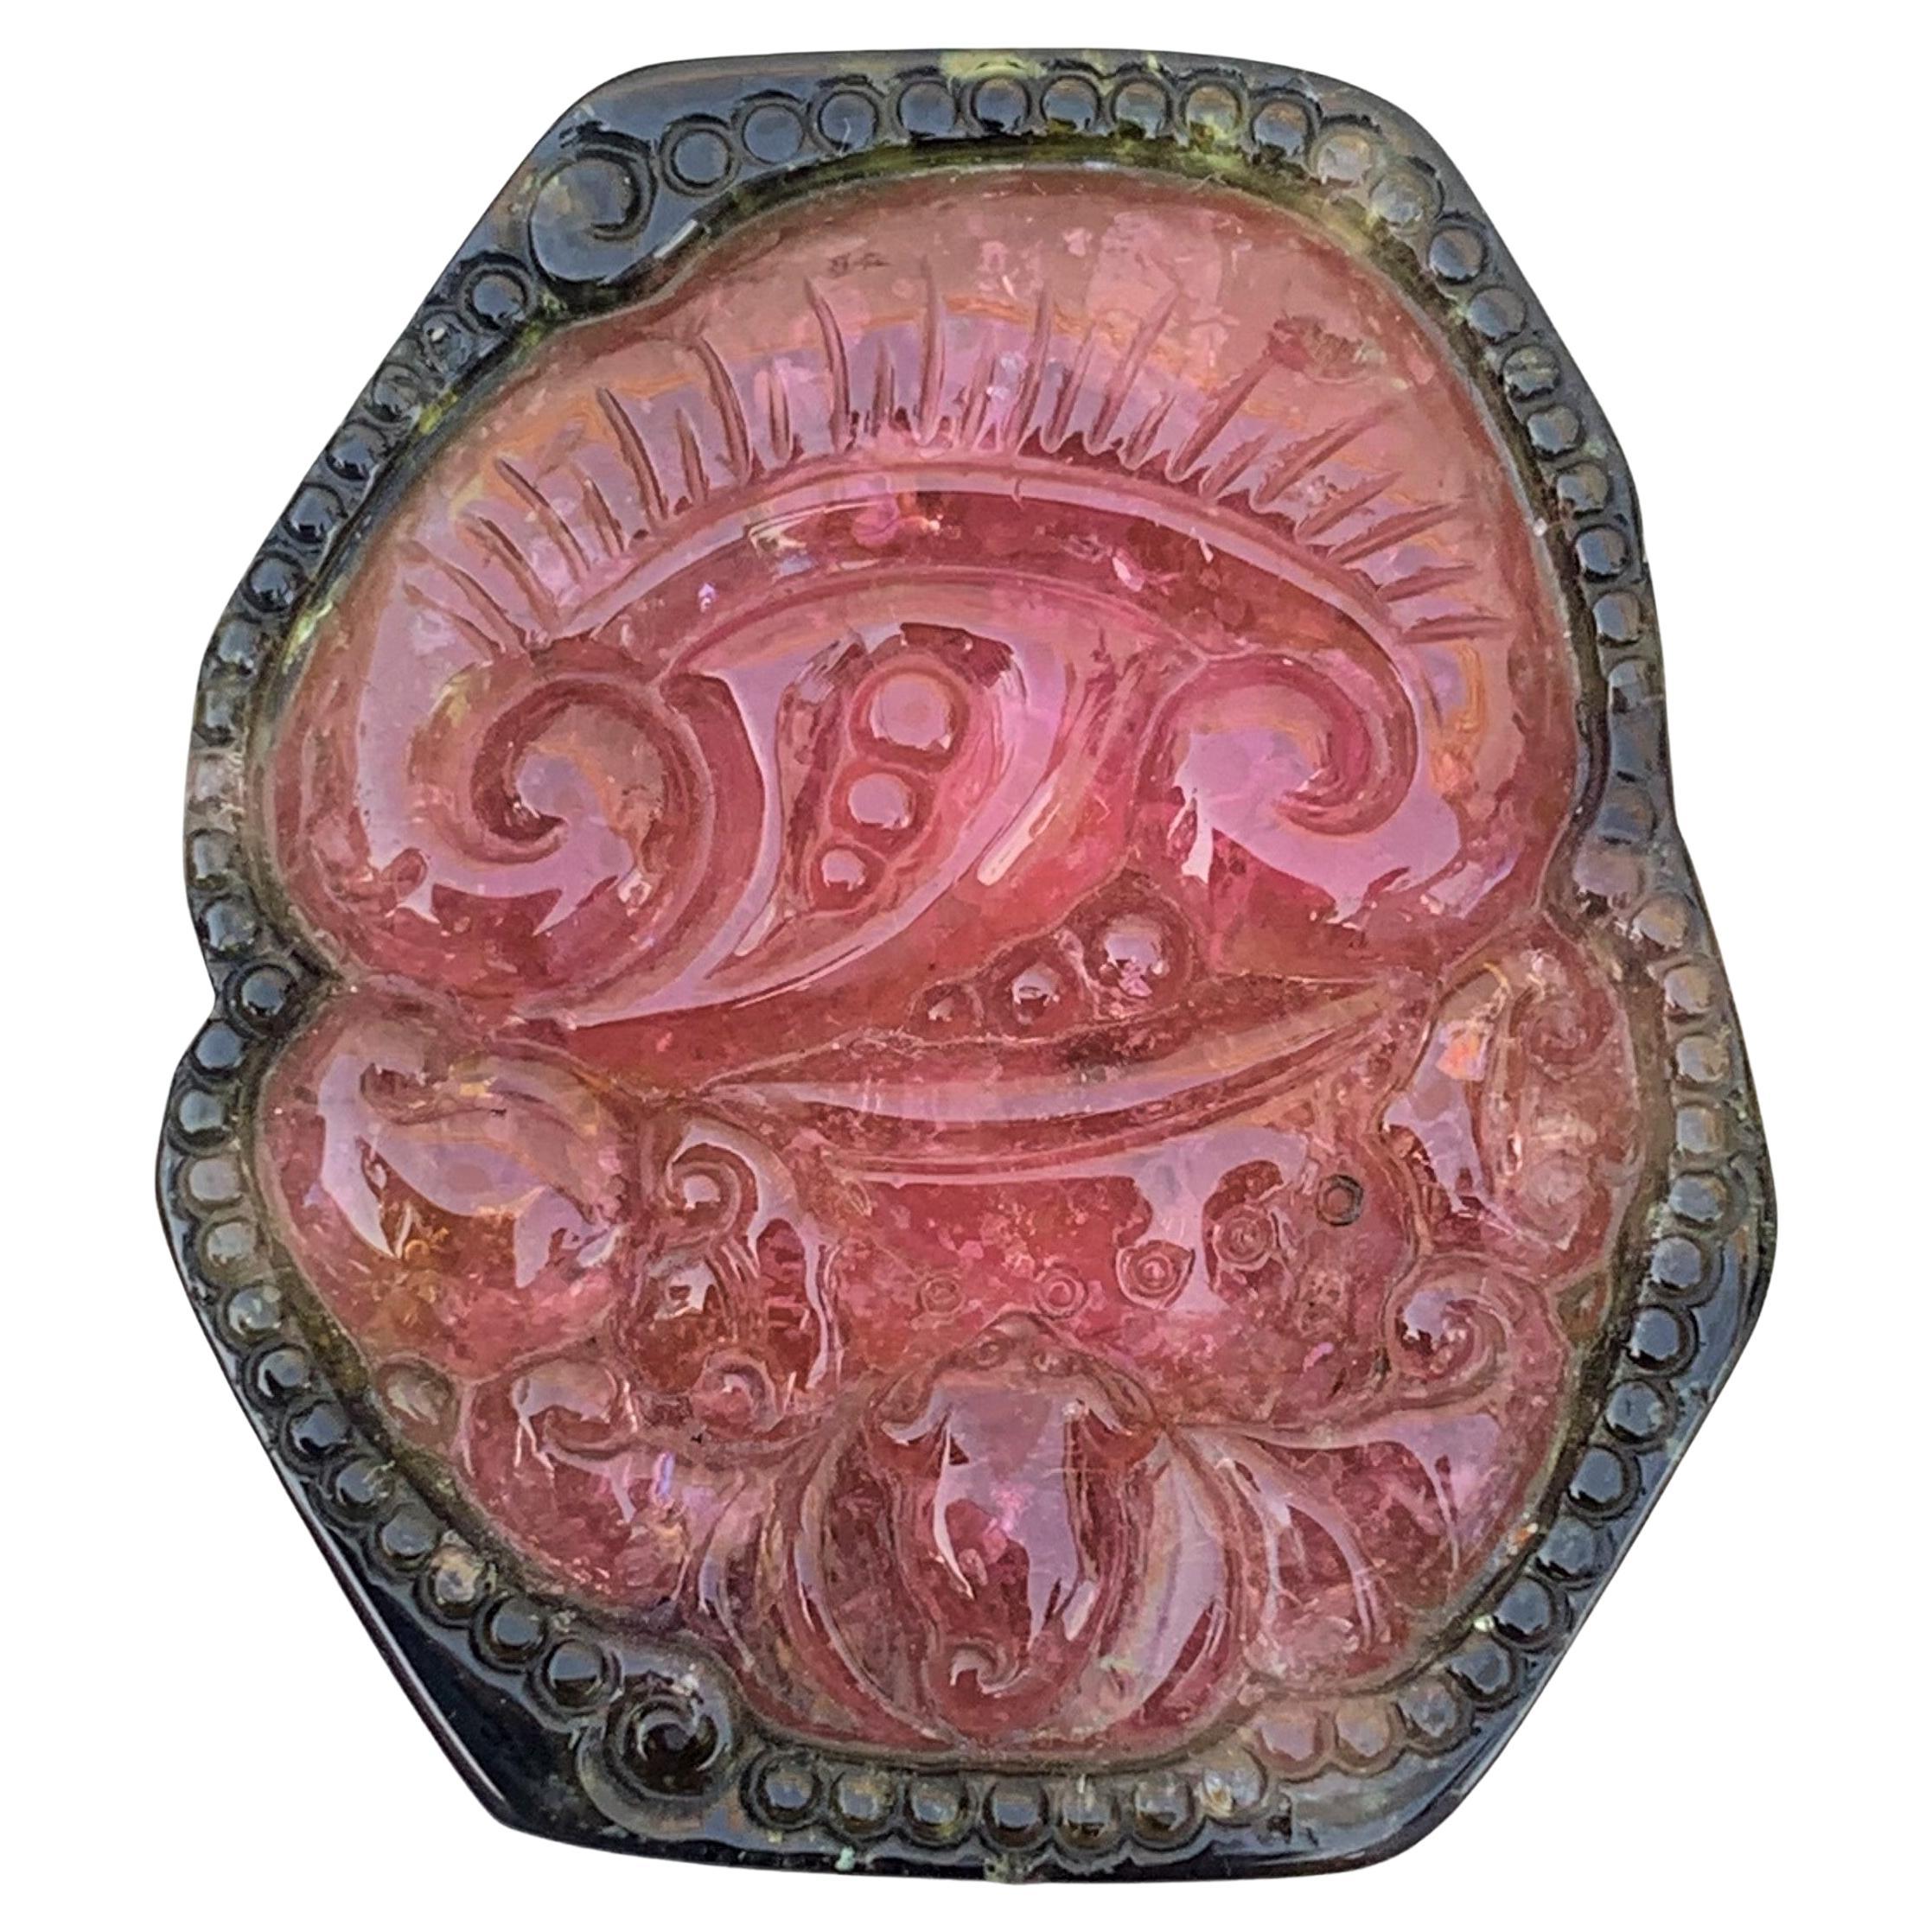 76.80 Carat Natural Bi Color Drilled Tourmaline Carving Gemstone From Africa